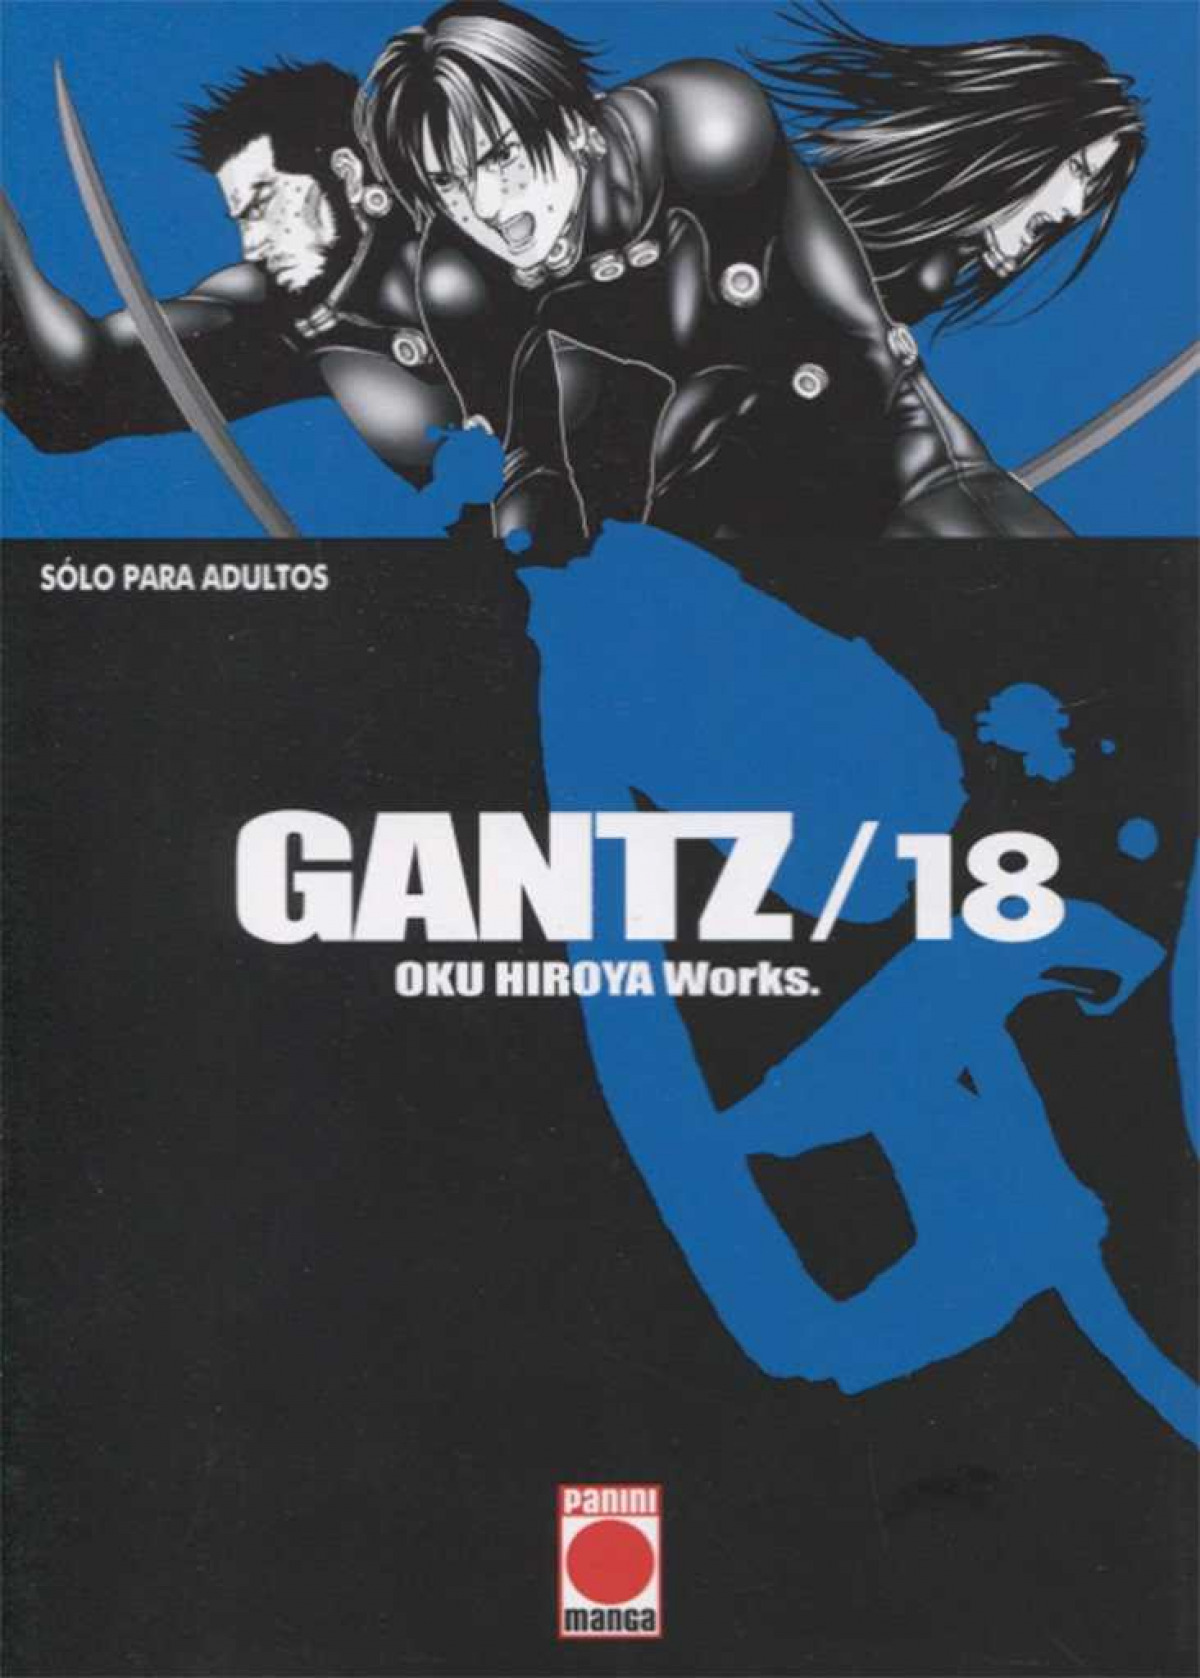 Gantz,18 - Hiroya Oku